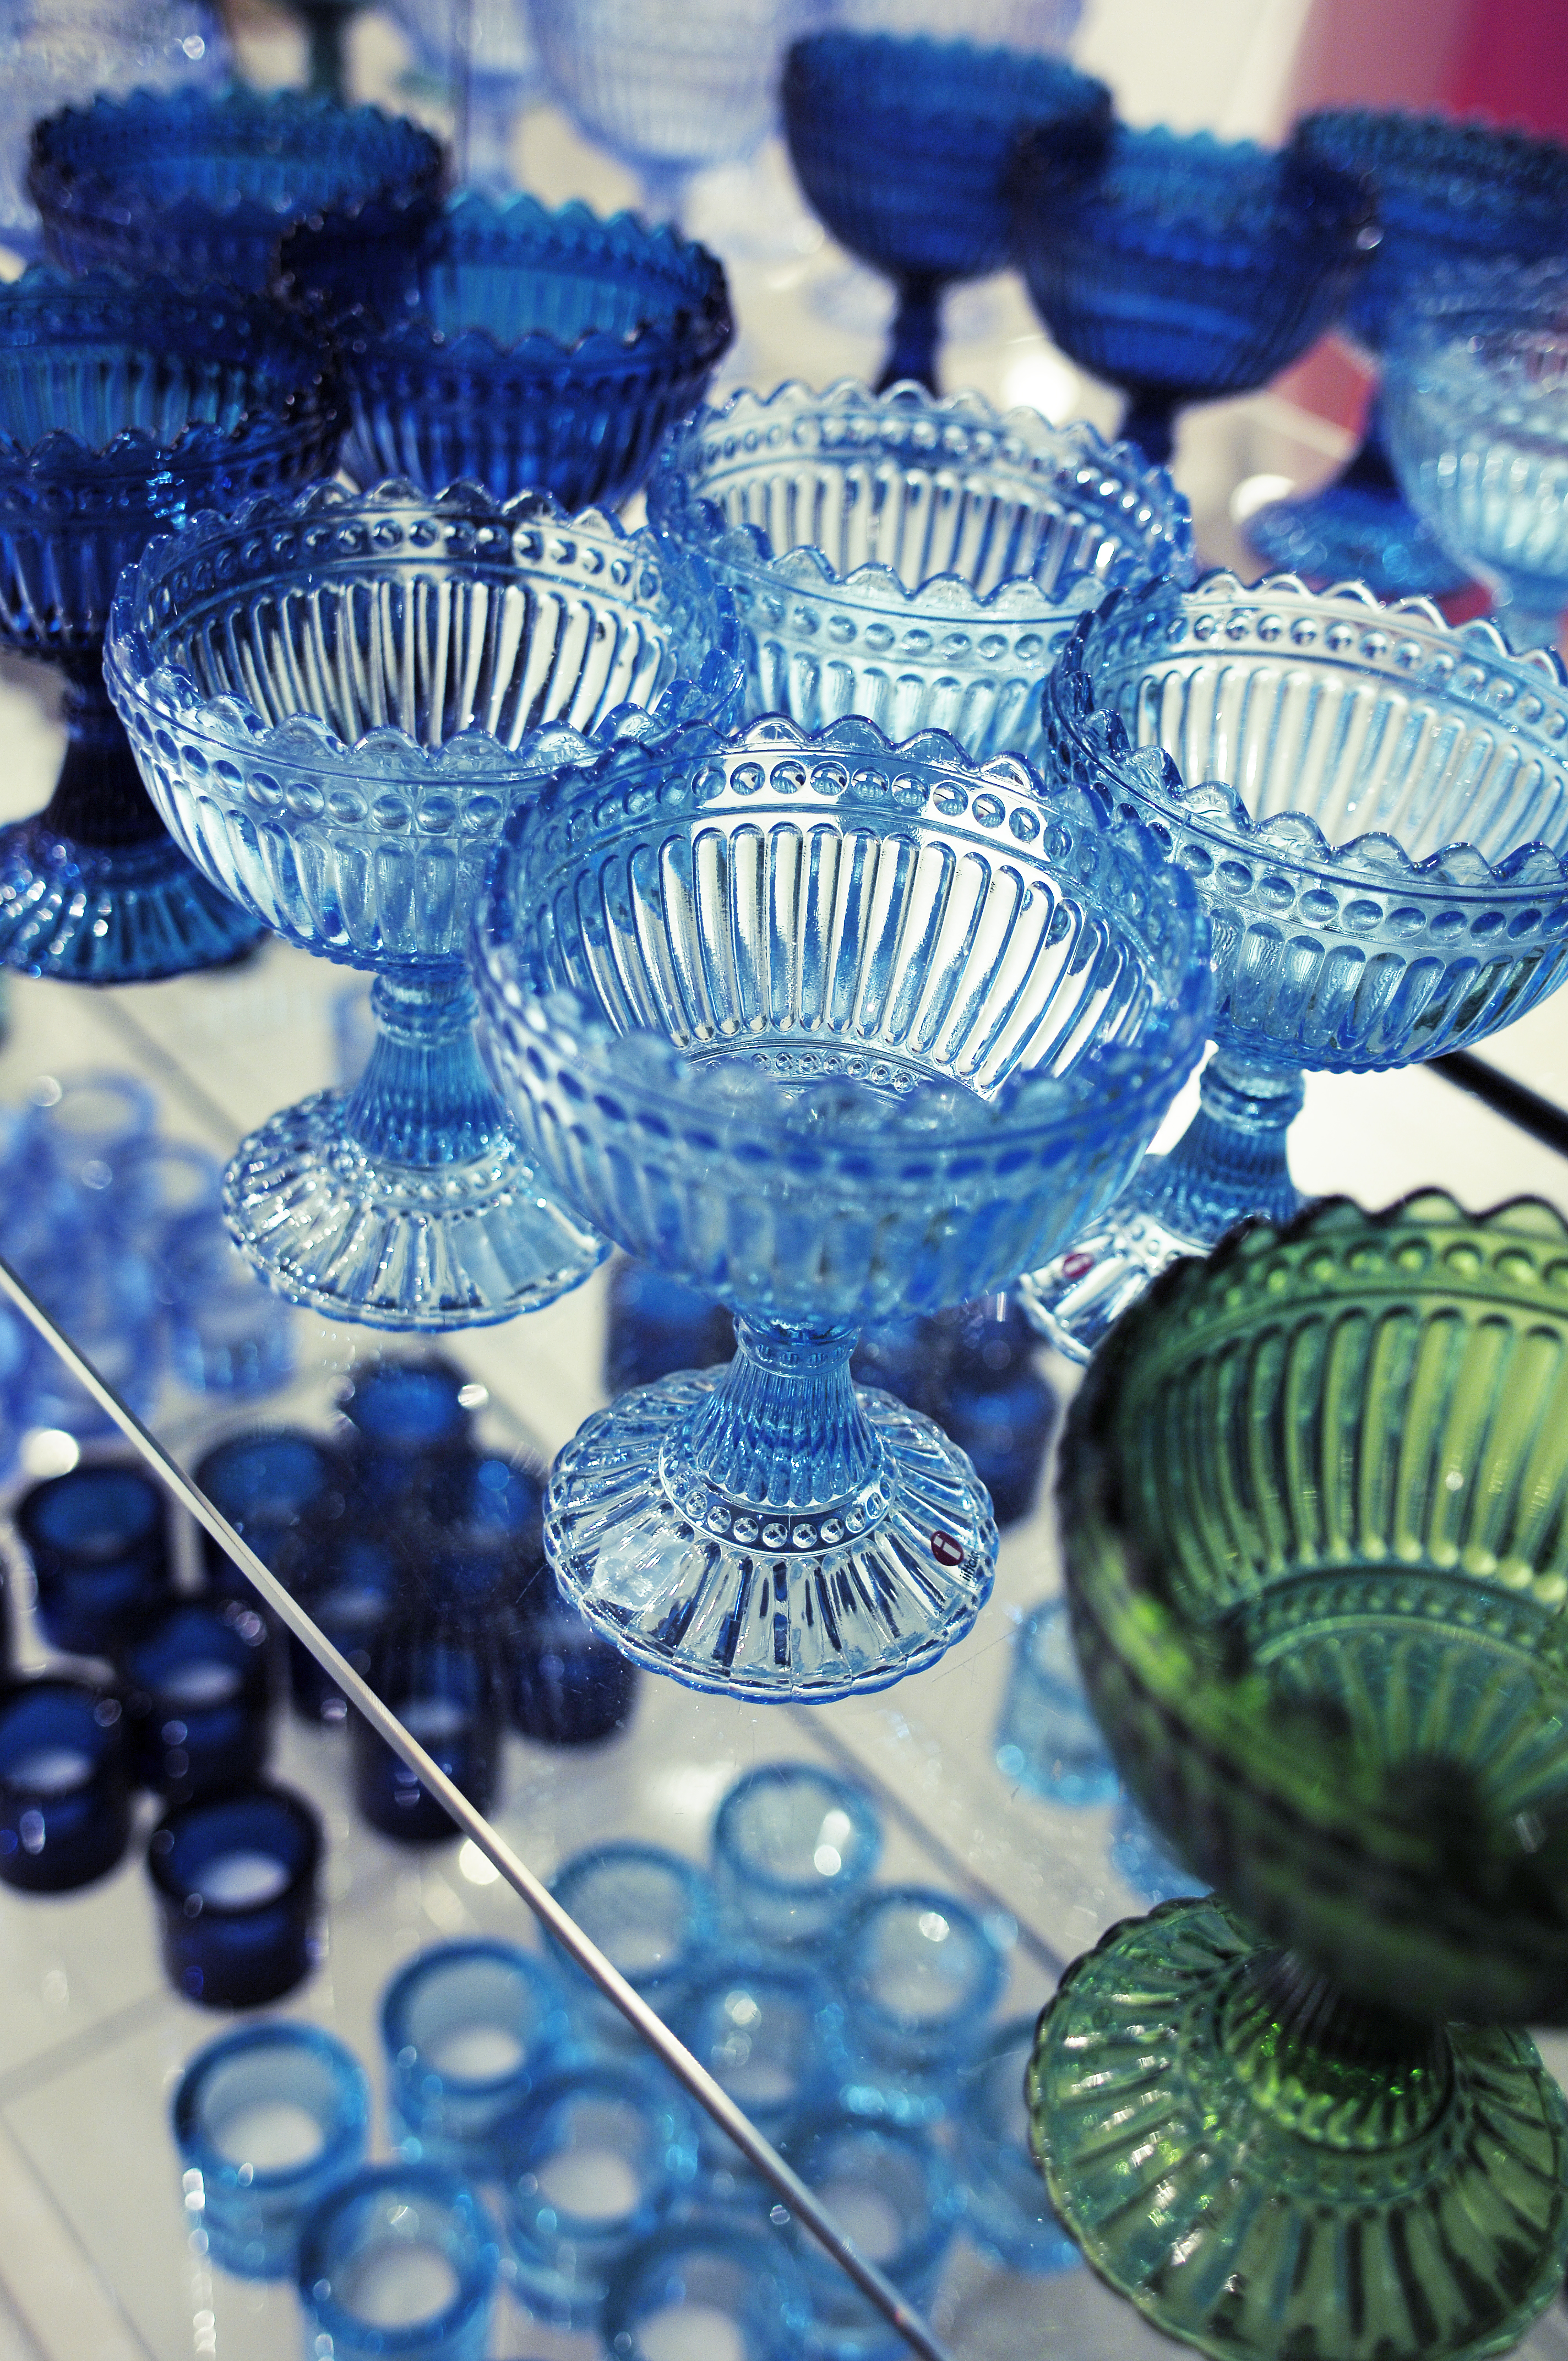 Dozen differently coloured Mariskooli bowls on a display.